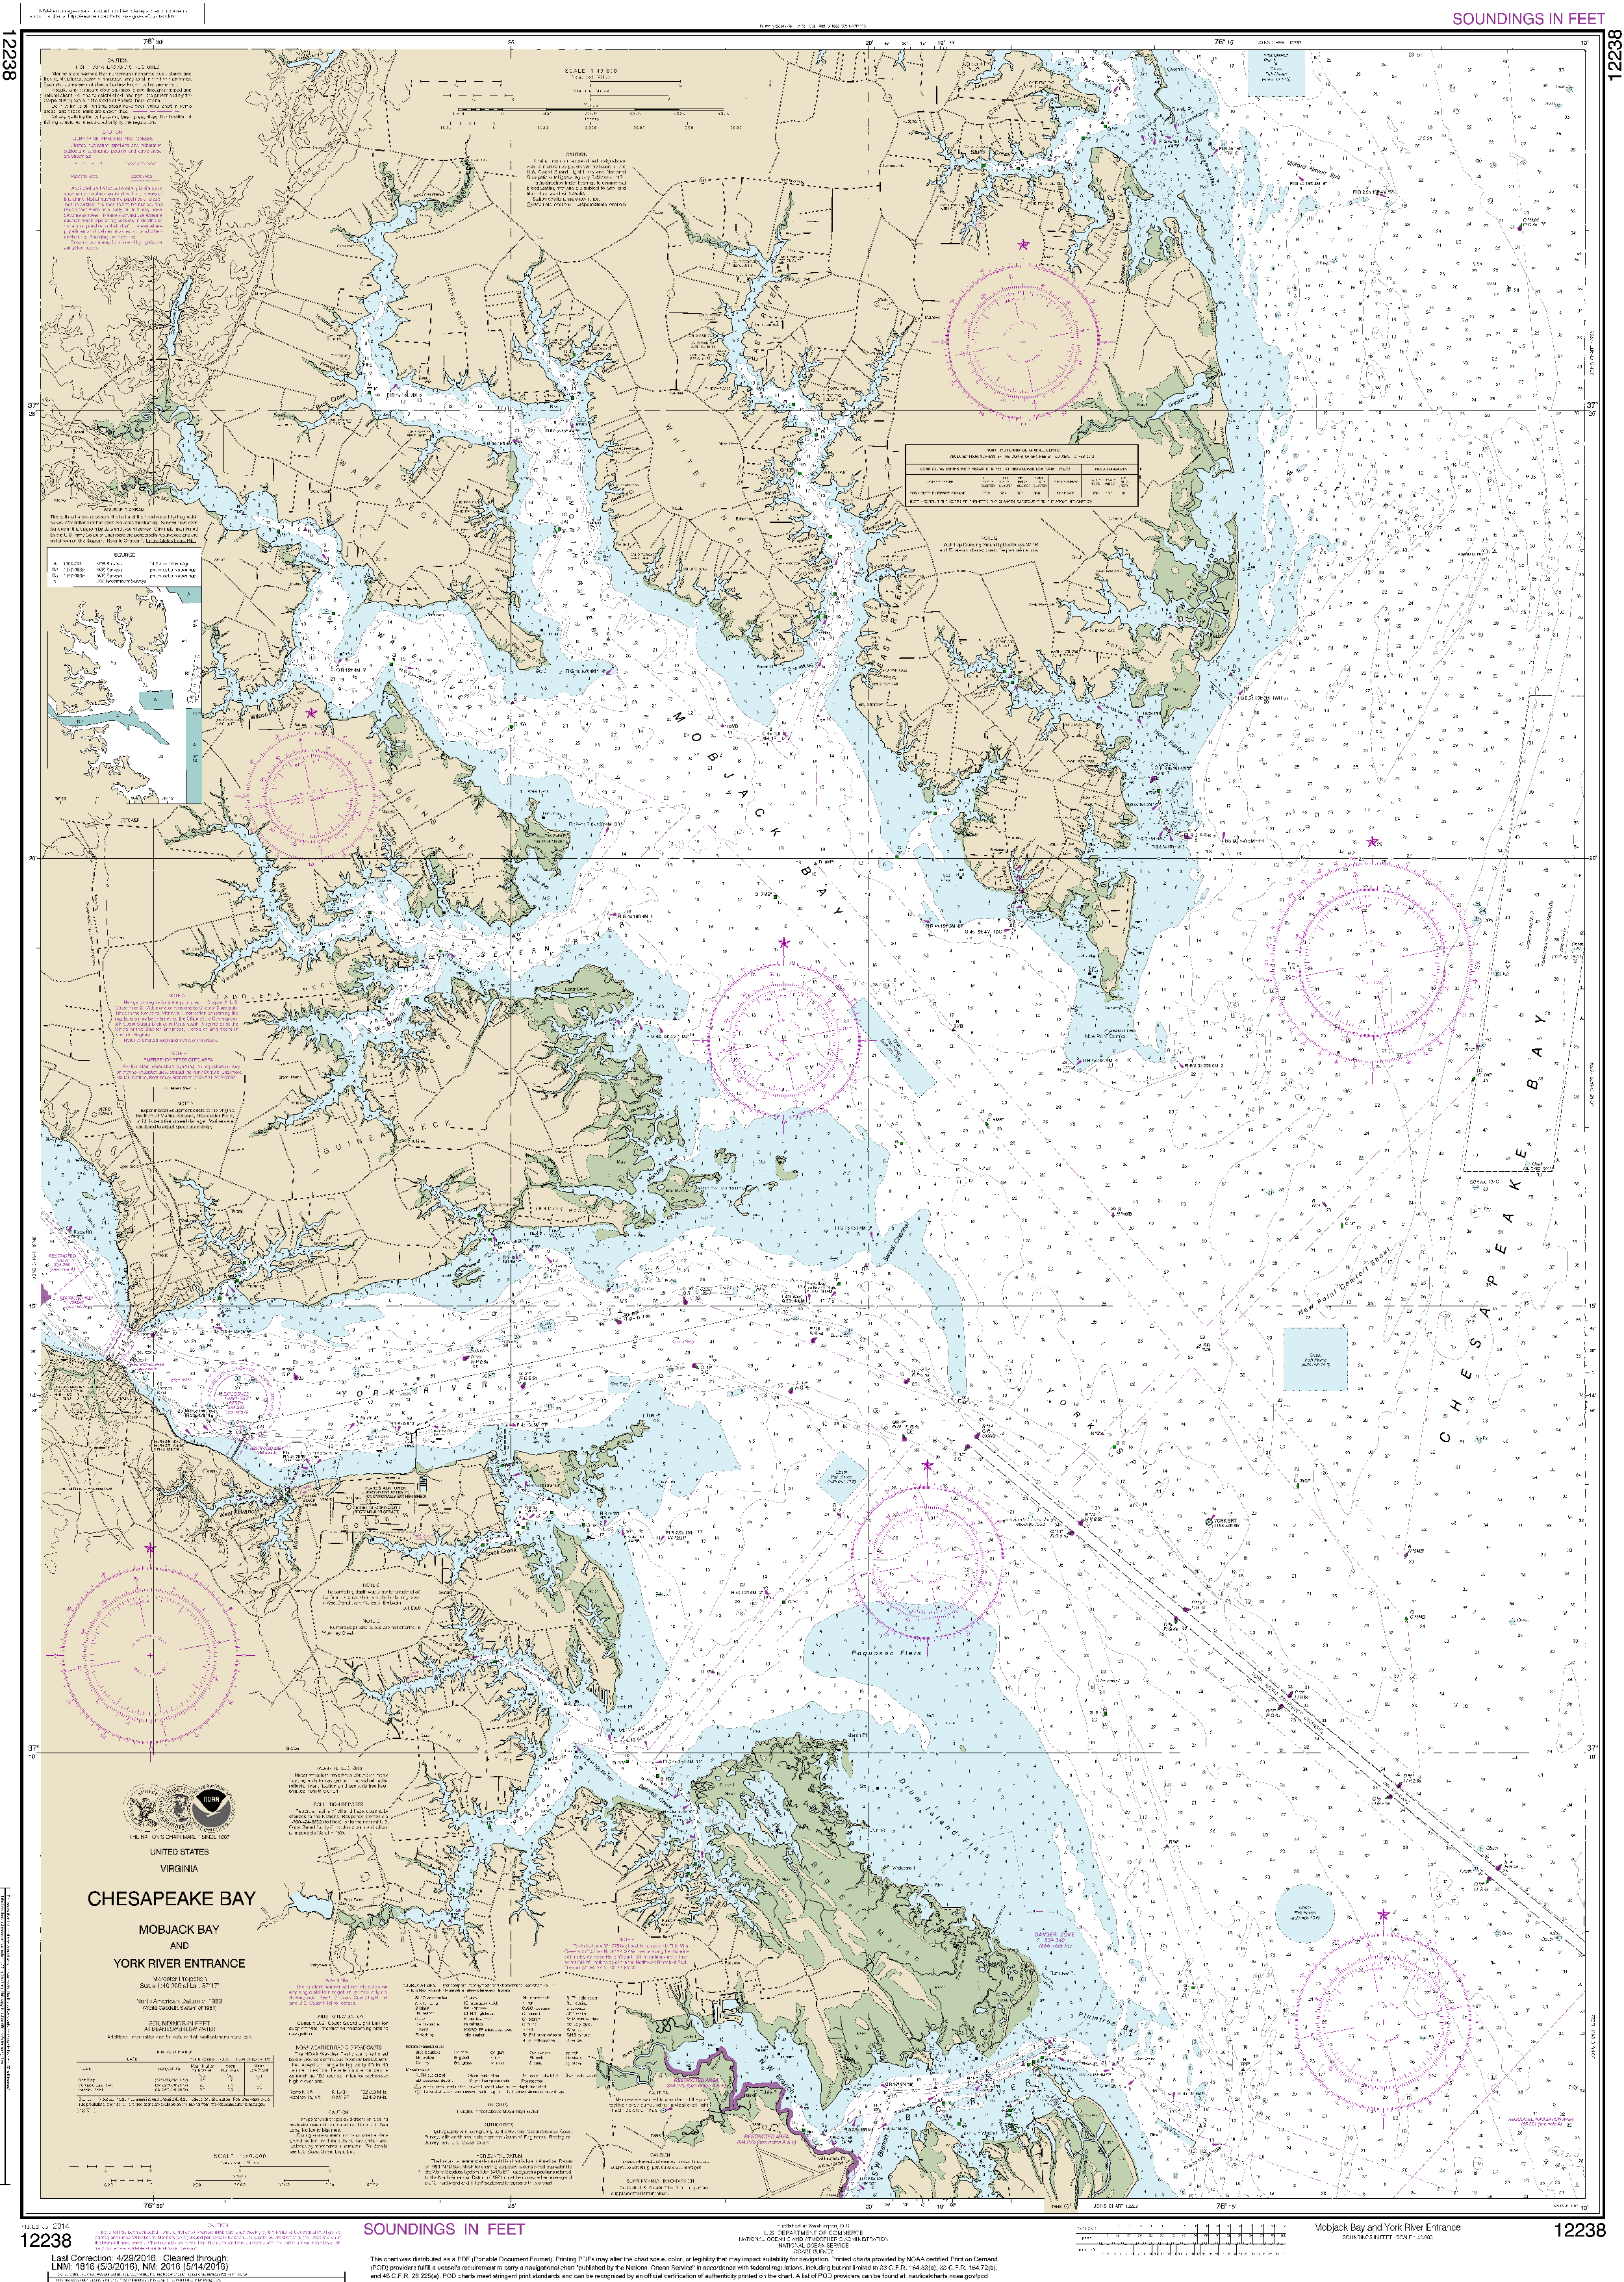 NOAA Nautical Chart 12238: Chesapeake Bay Mobjack Bay and York River Entrance